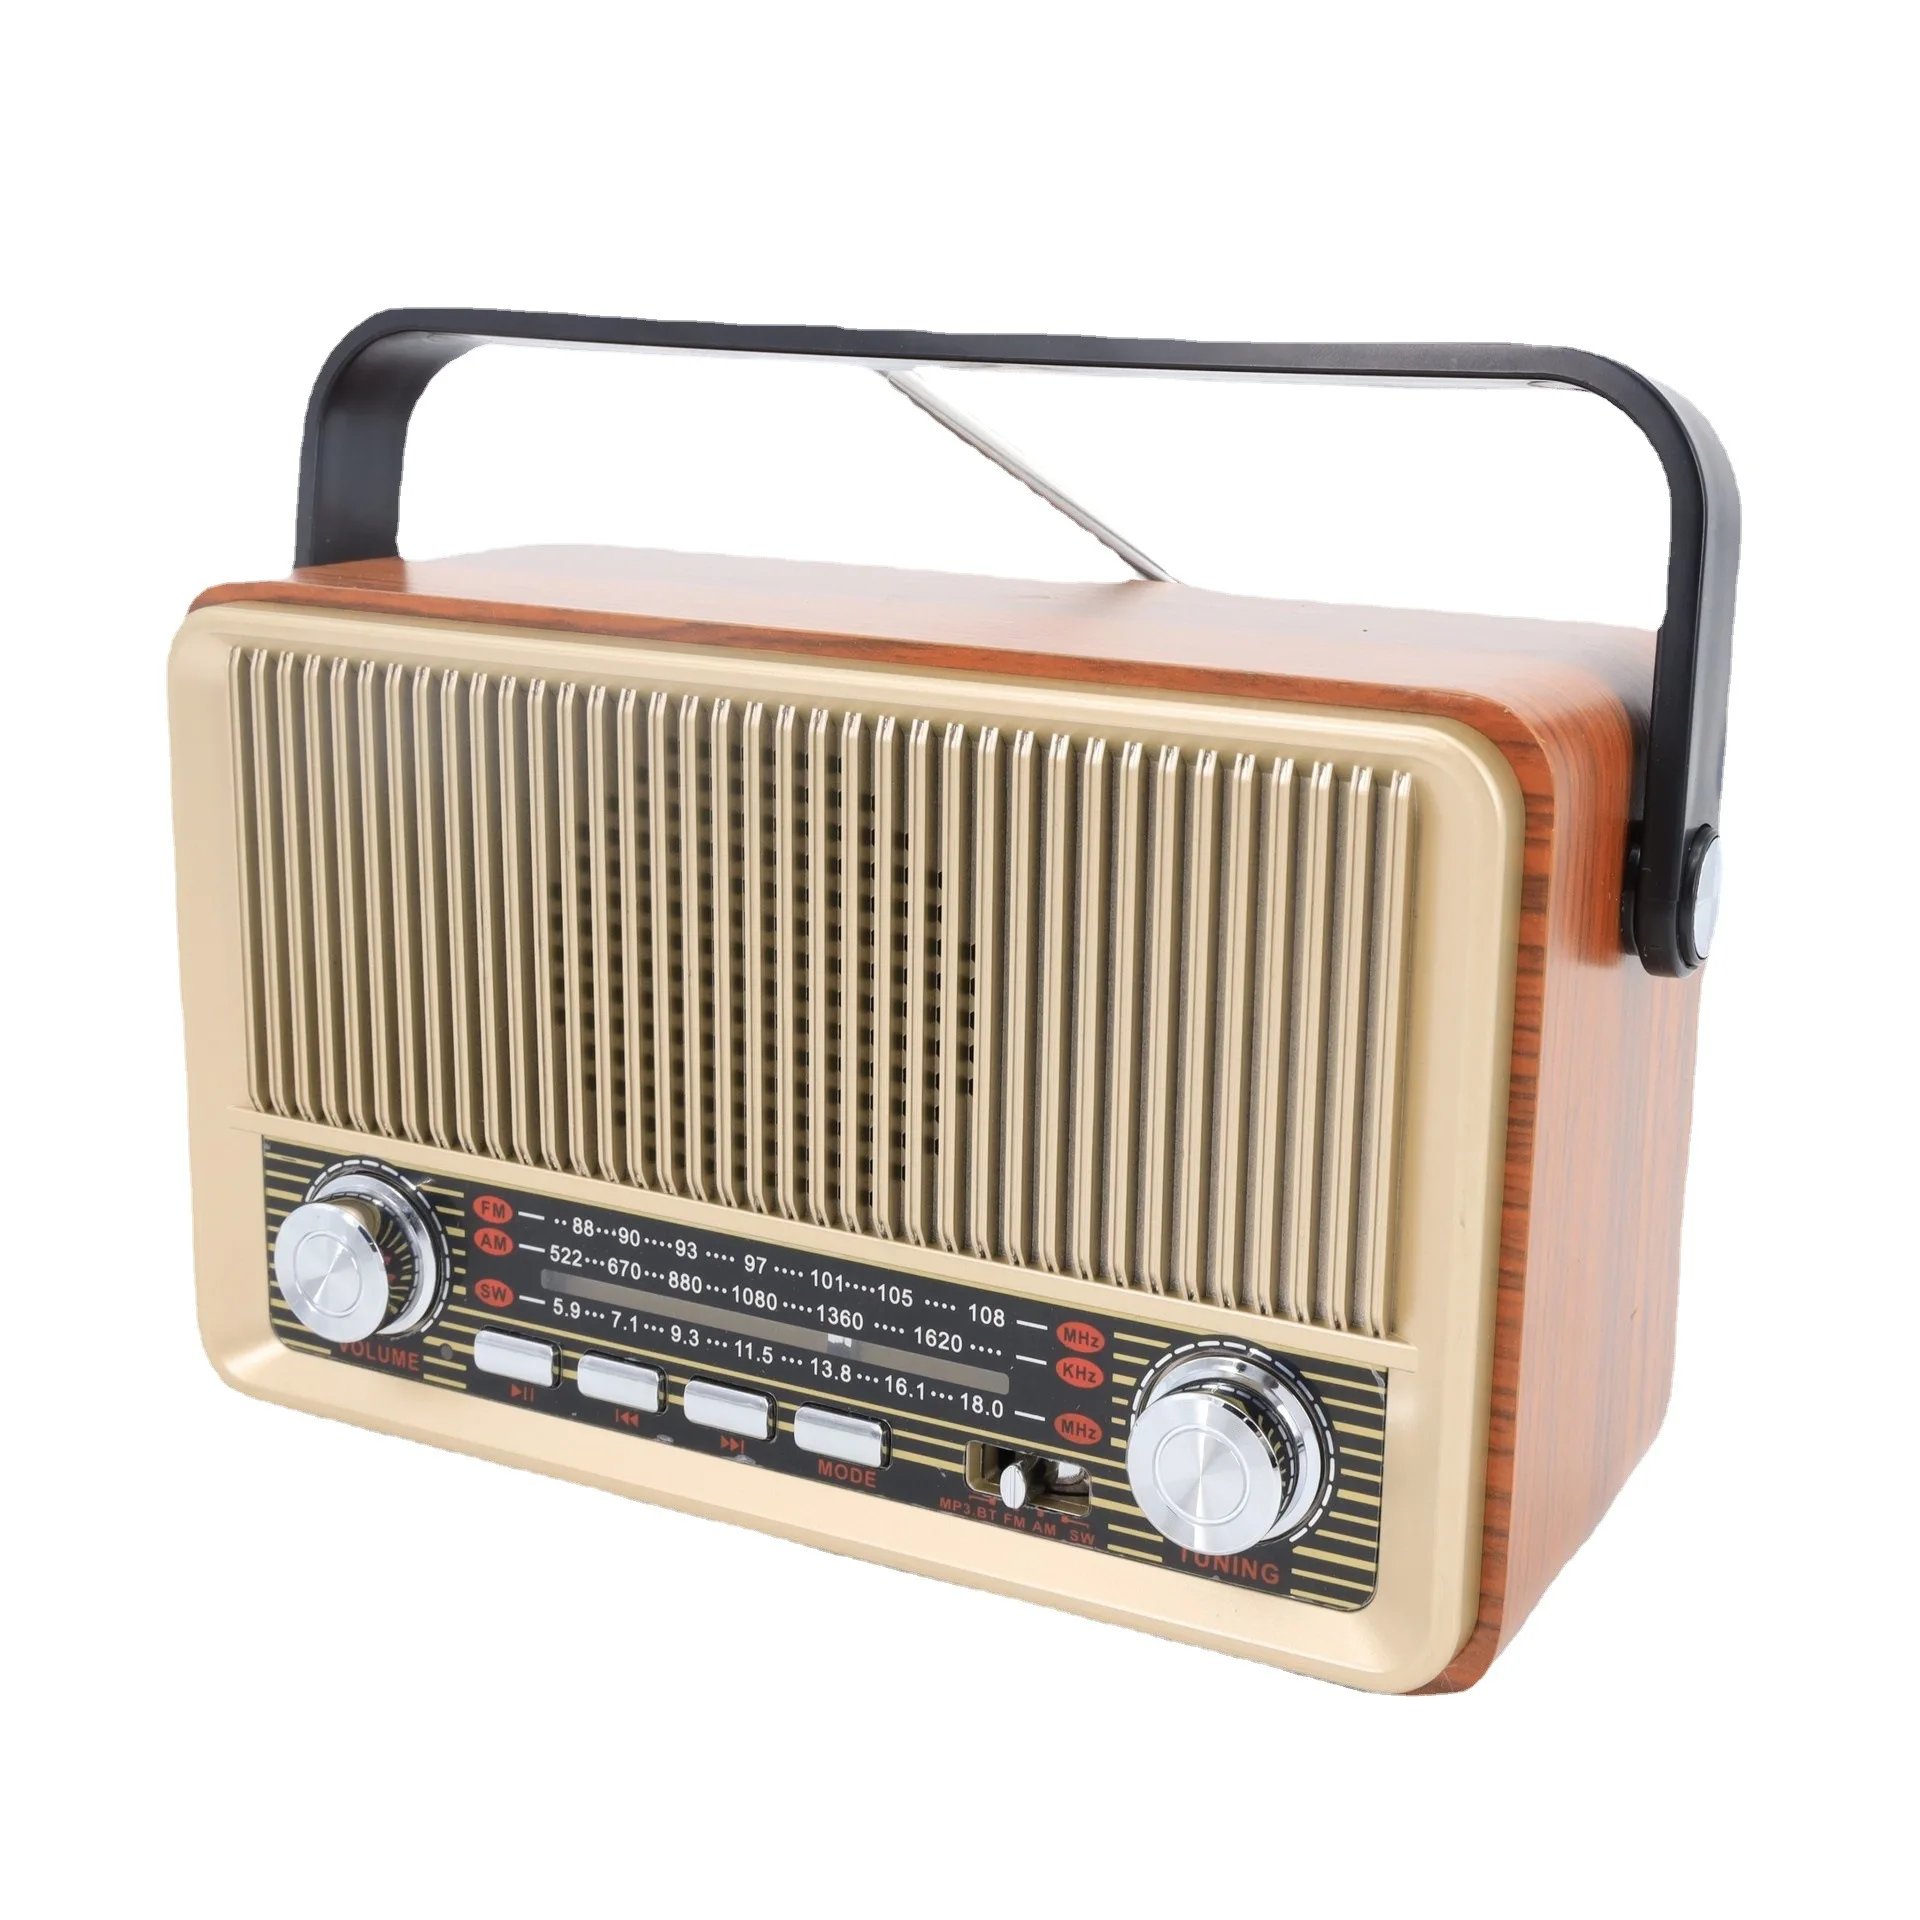 Altavoz de Radio FM portátil, grabadora de cinta Retro, reproductor de  música inalámbrico Bluetooth 5,0, Radio multibanda para exteriores  AM/FM/USB MP3 Boombox